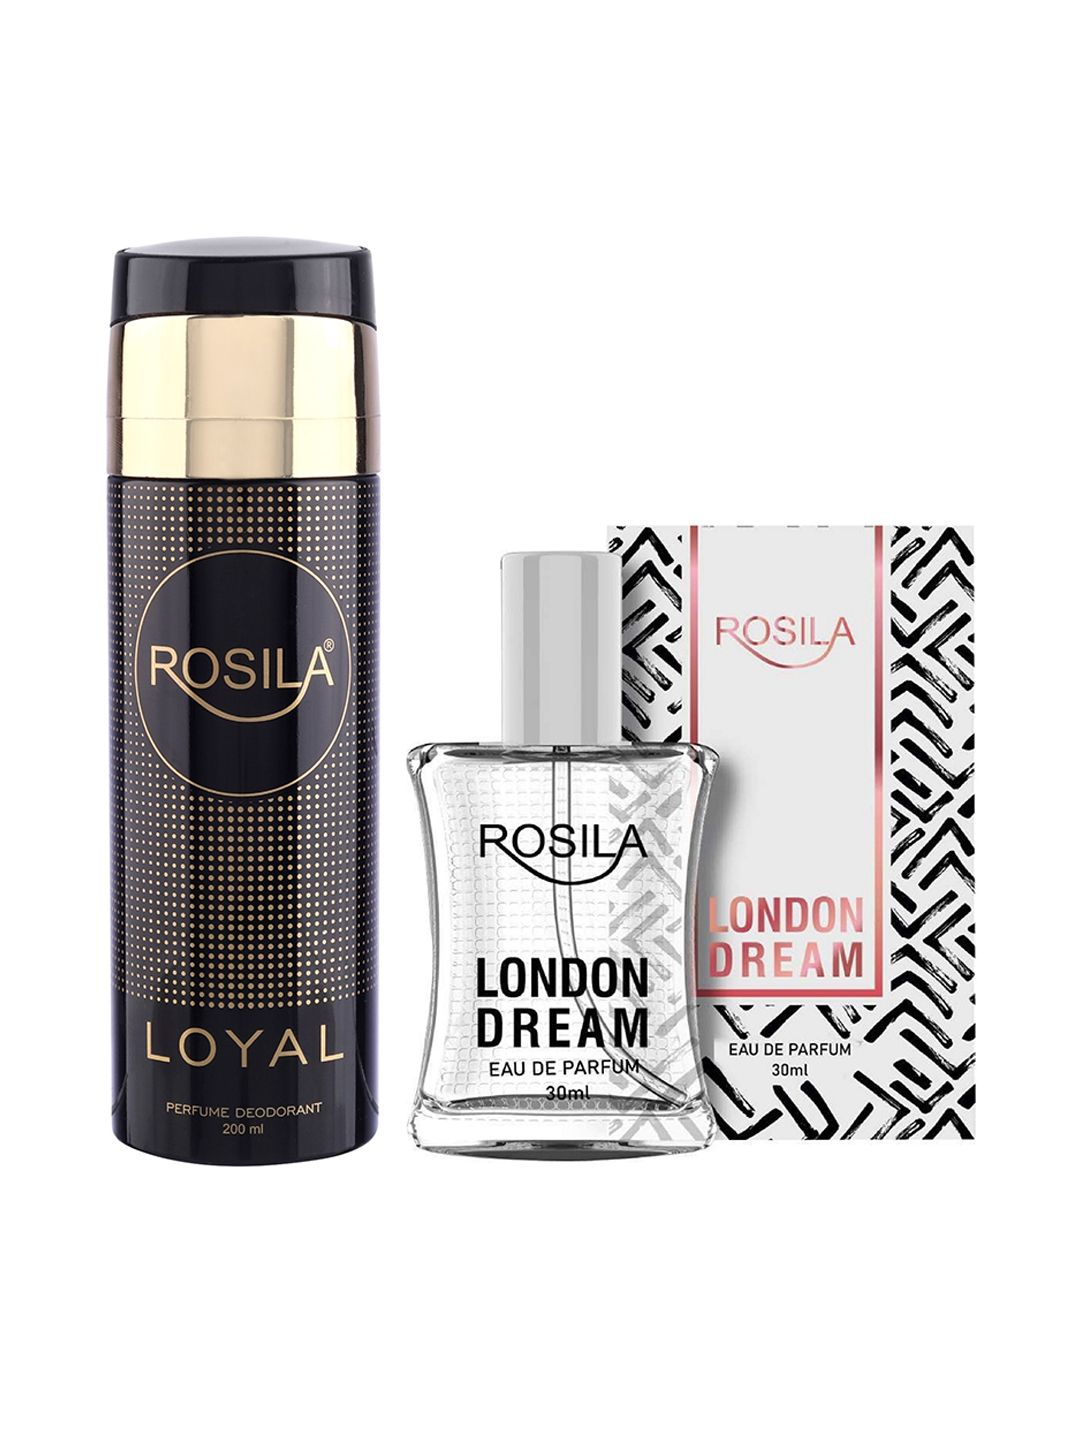 ROSILA Set of London Dreams Eau De Parfum 30 ml & Loyal Deodorant 200 ml Price in India